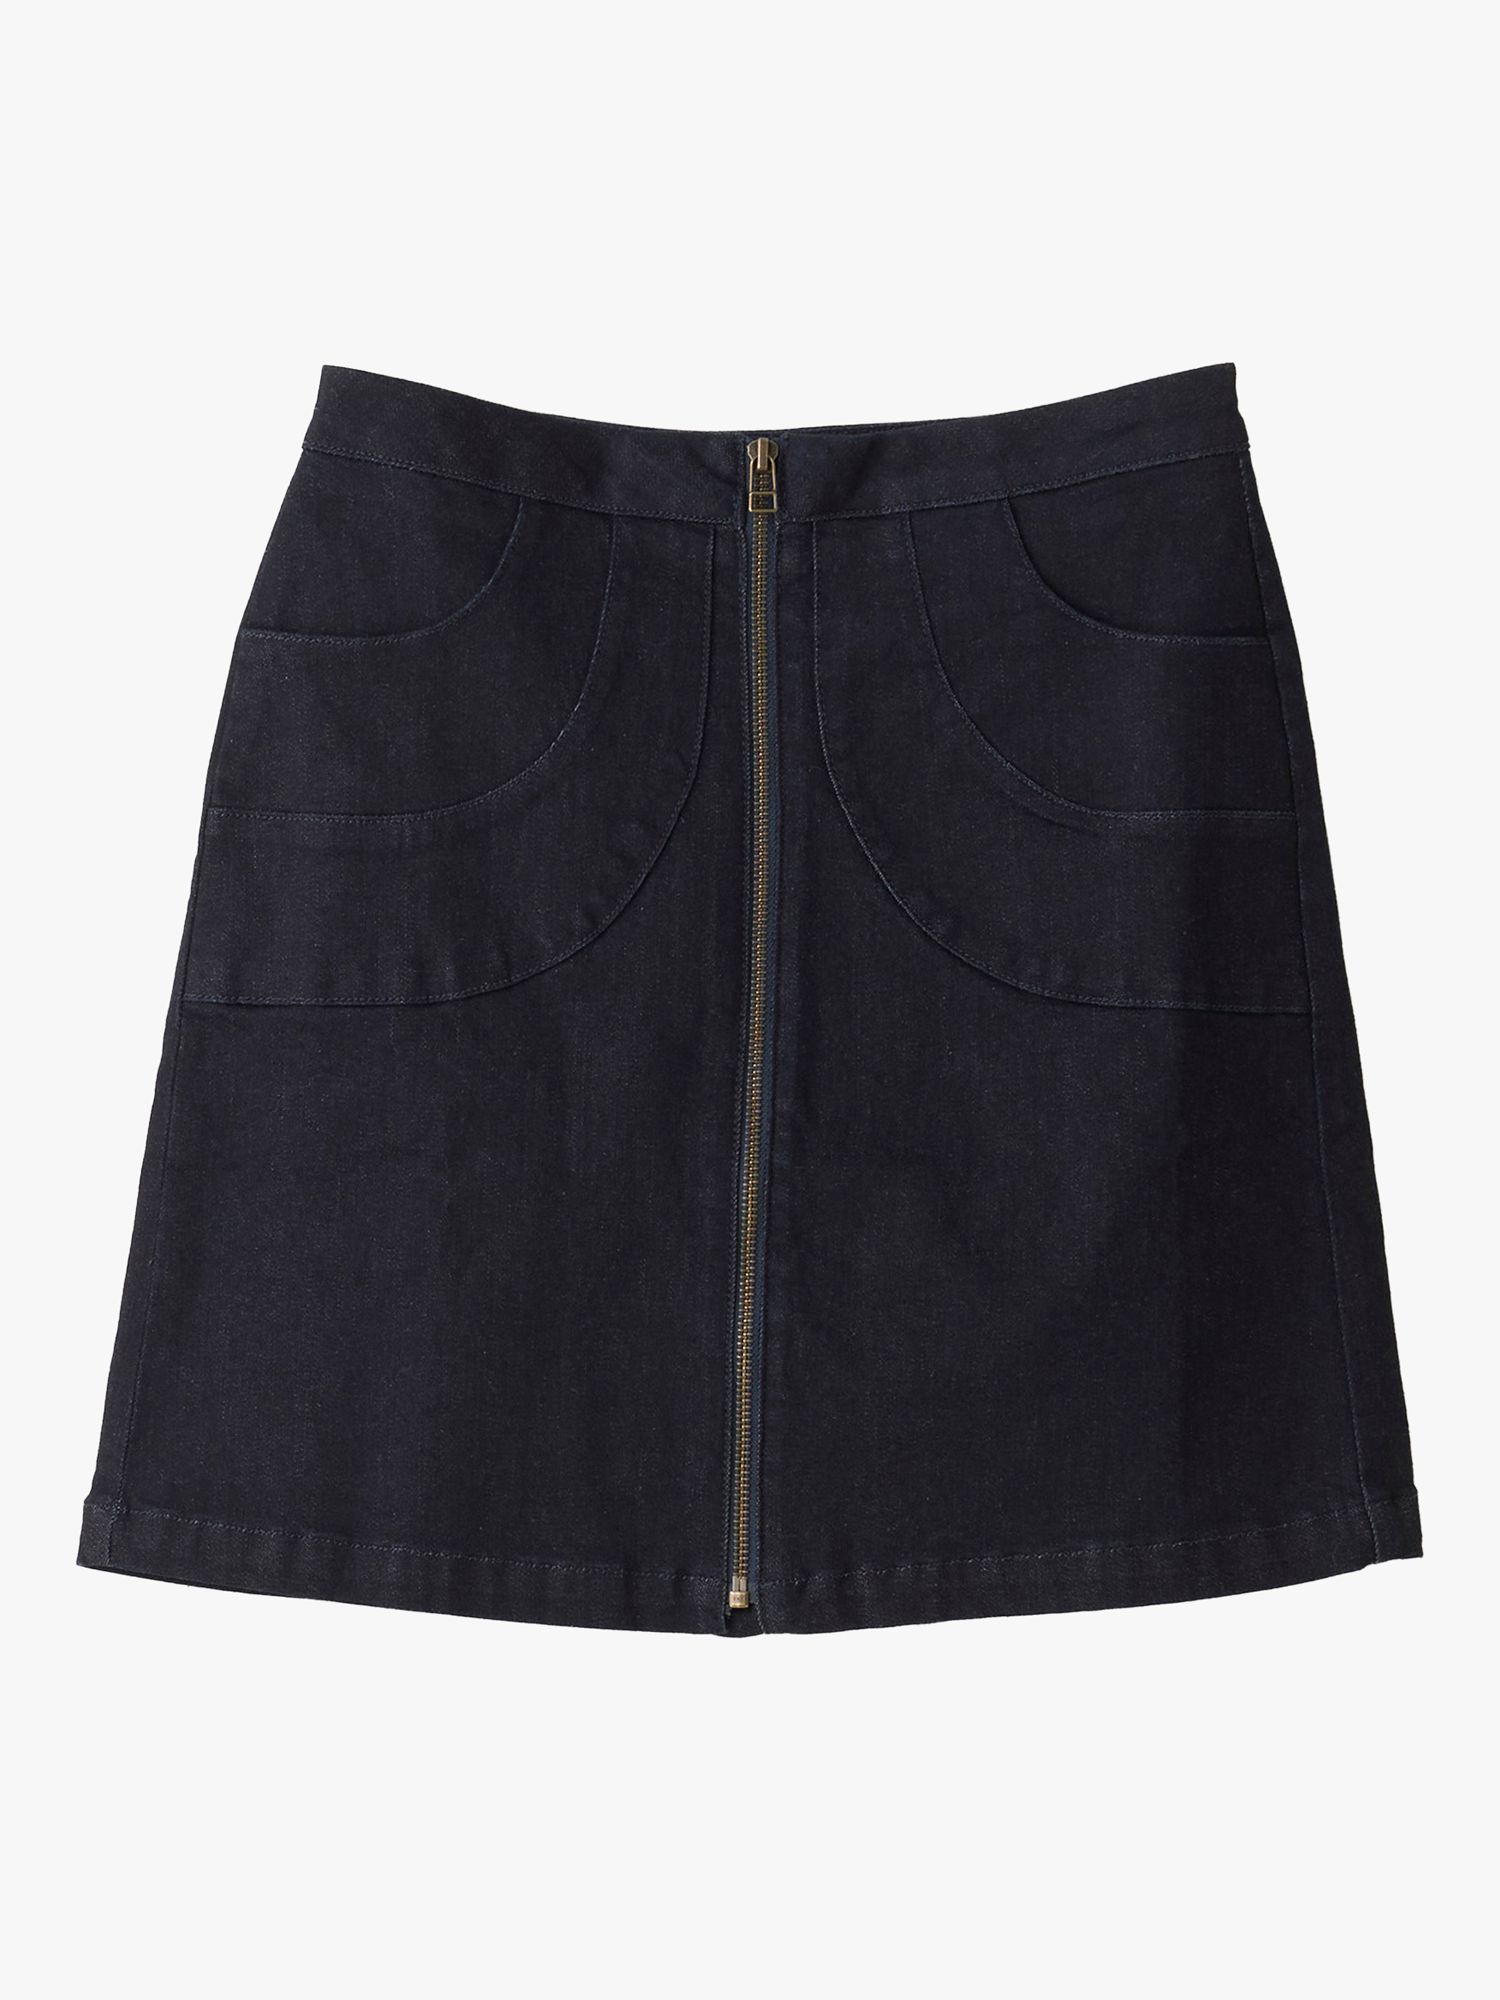 Buy Truly Denim Mini Skirt, Midnight Online at johnlewis.com